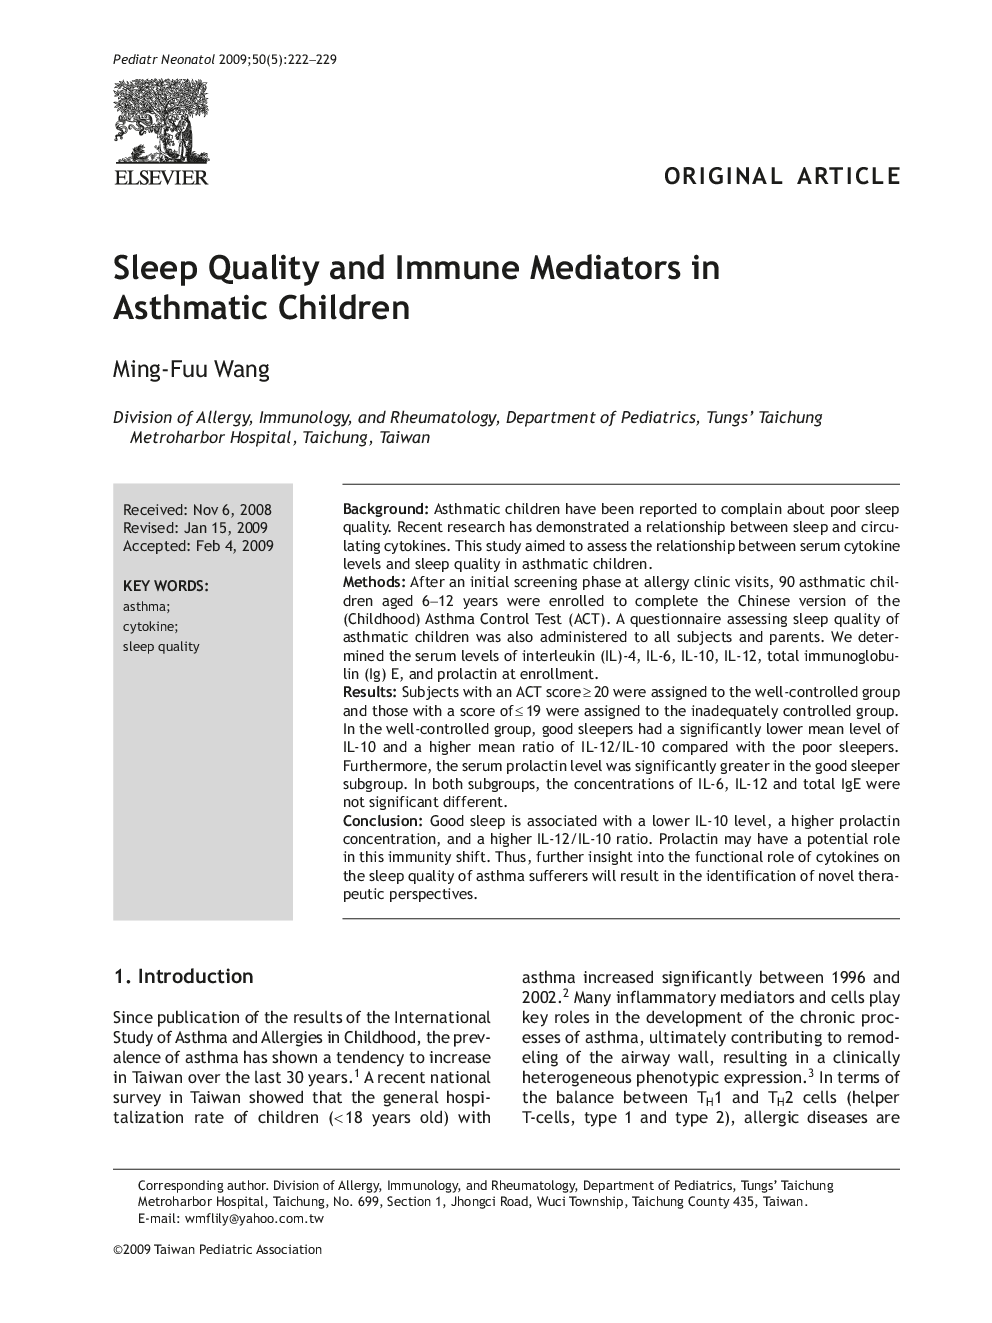 Sleep Quality and Immune Mediators in Asthmatic Children